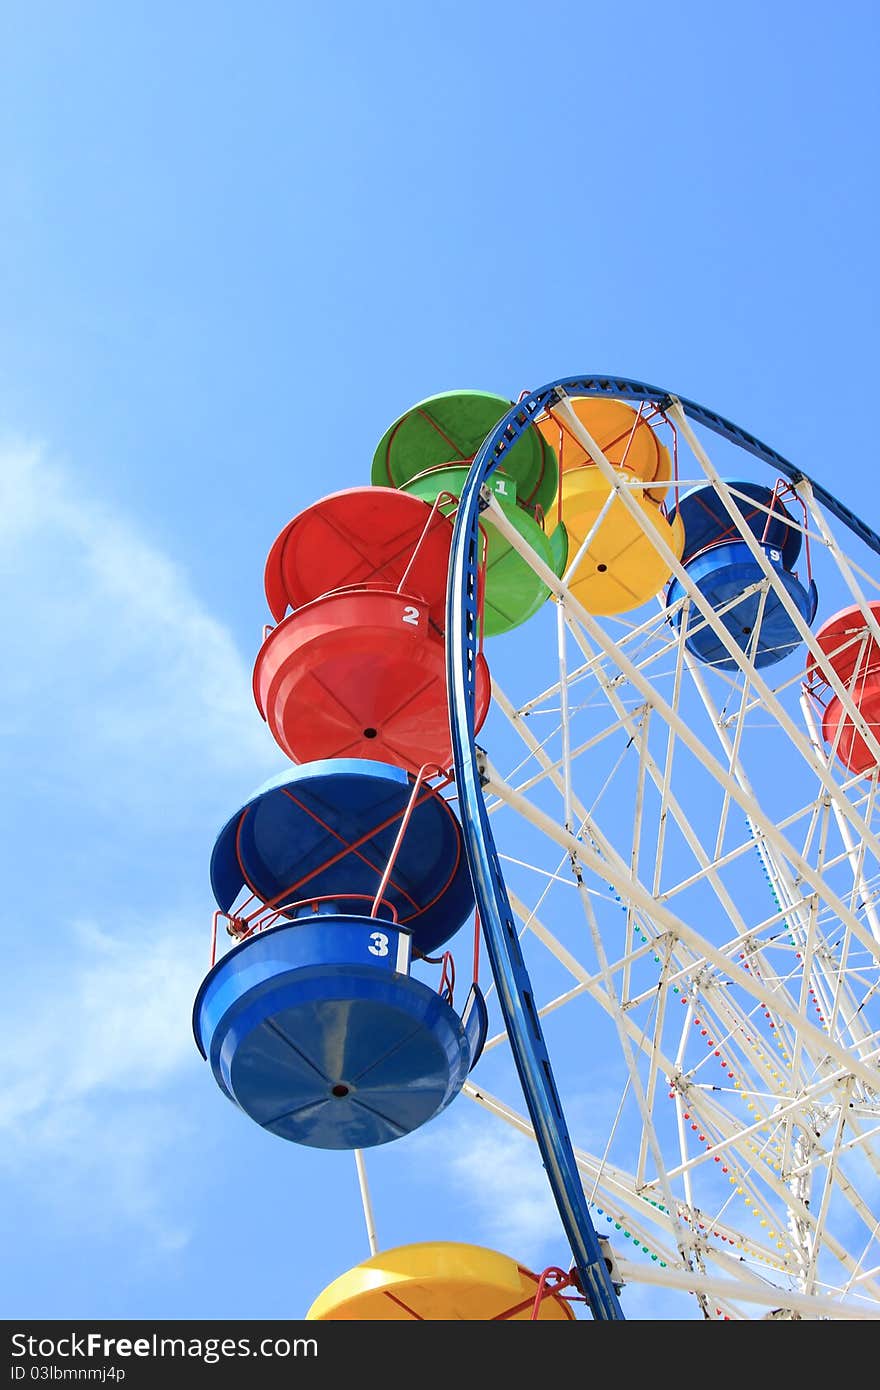 Attraction Ferris wheel at an amusement park.